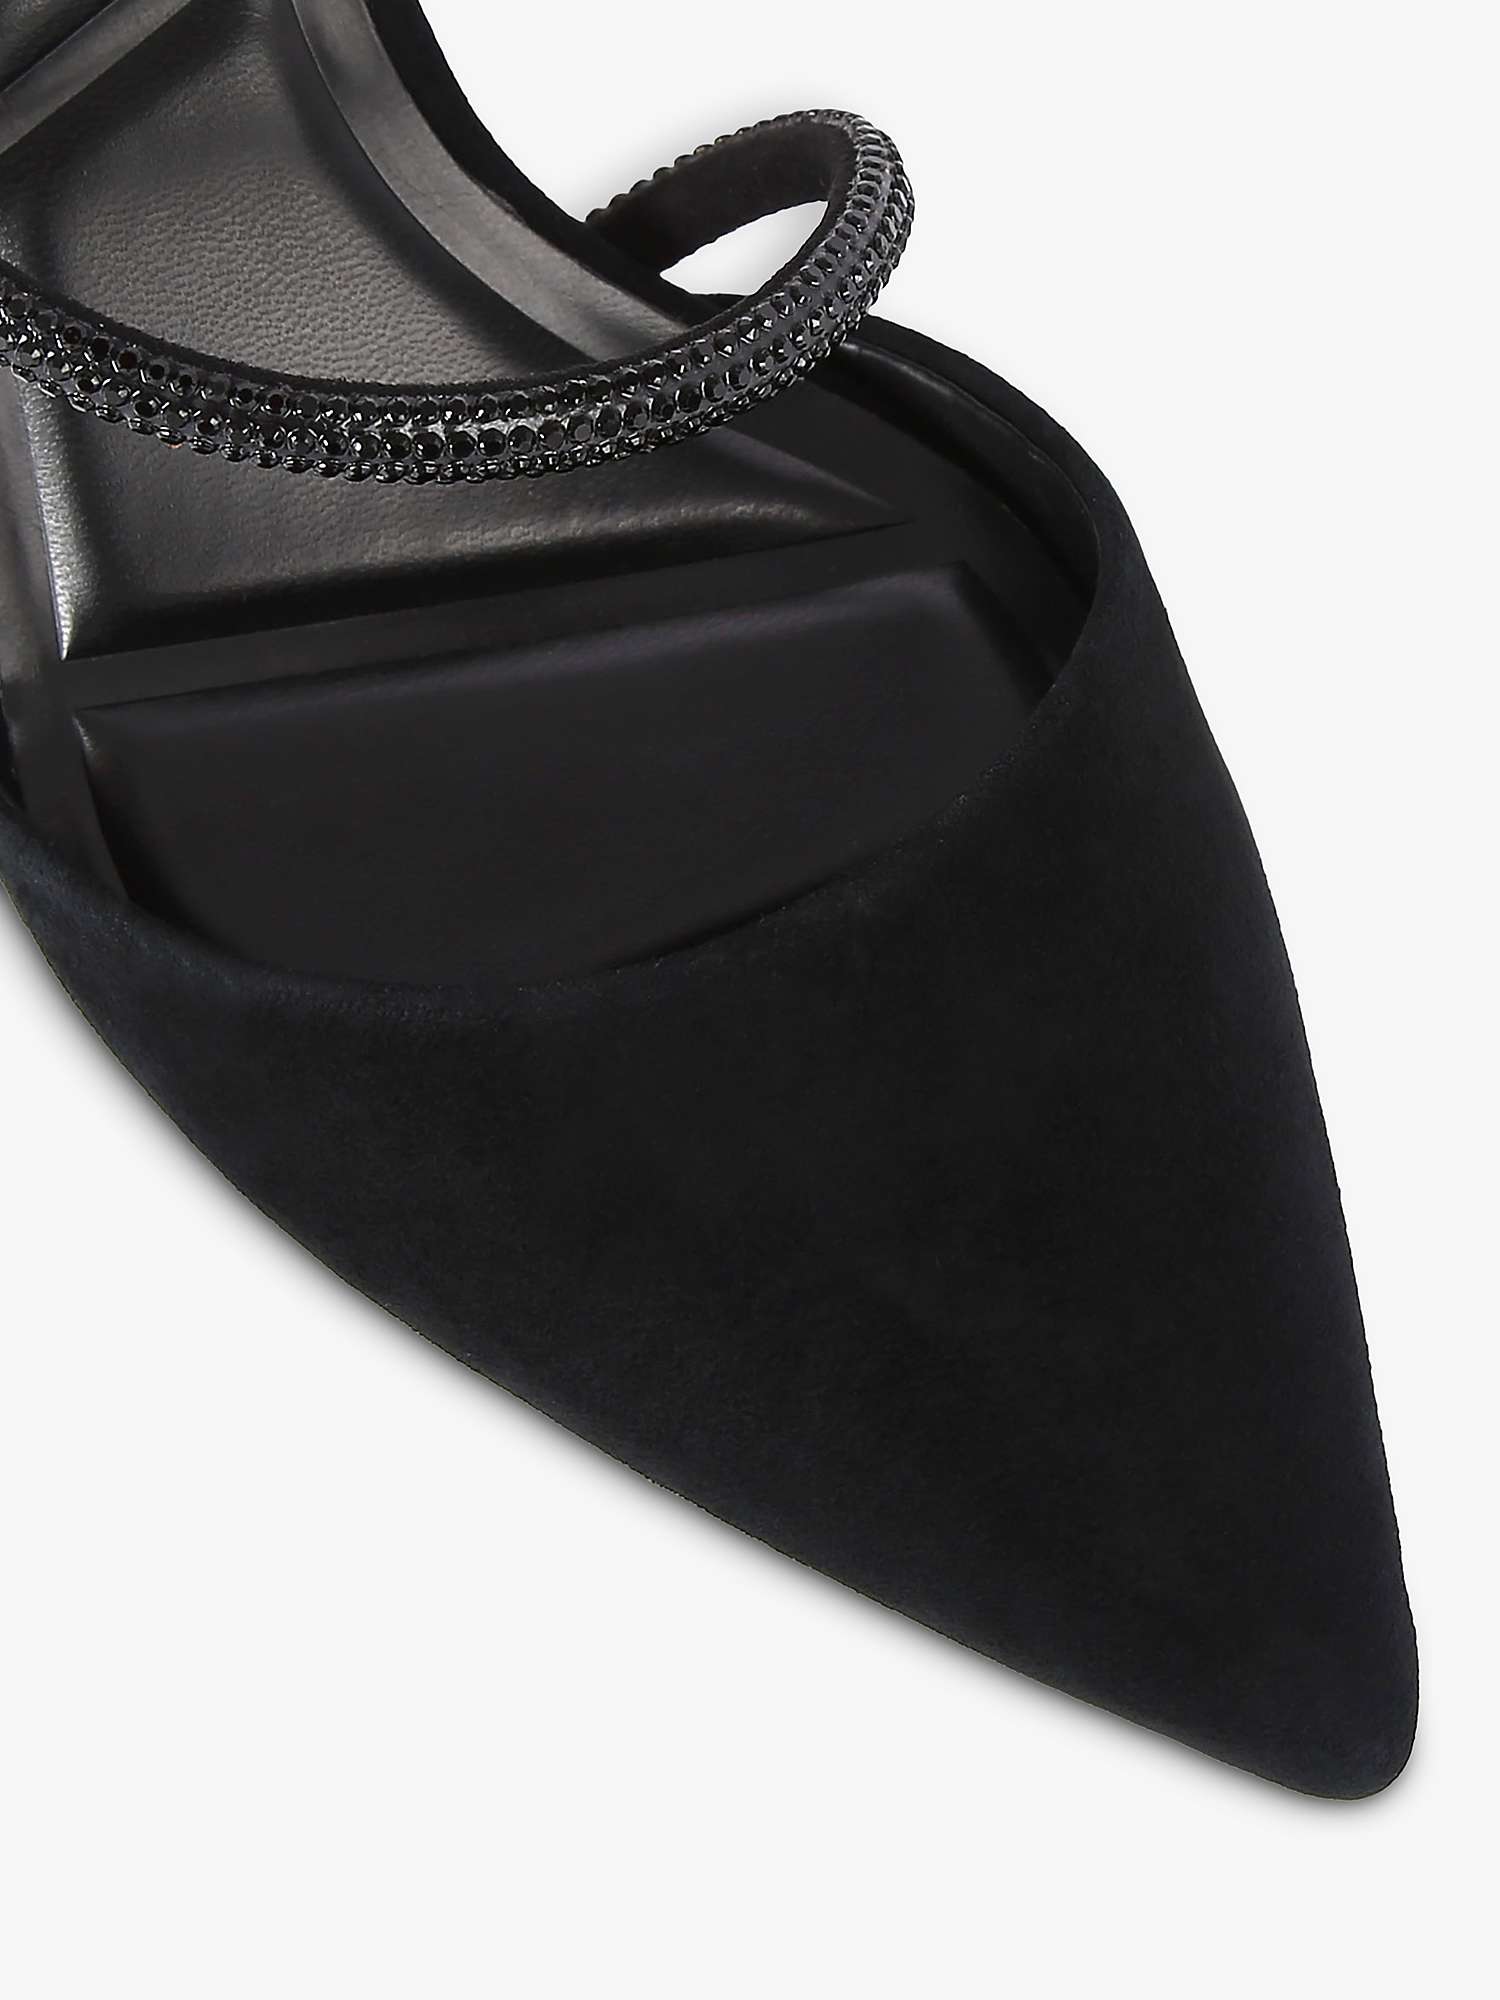 Buy Carvela Paparazzi Suede High Heel Court Shoes, Black Online at johnlewis.com